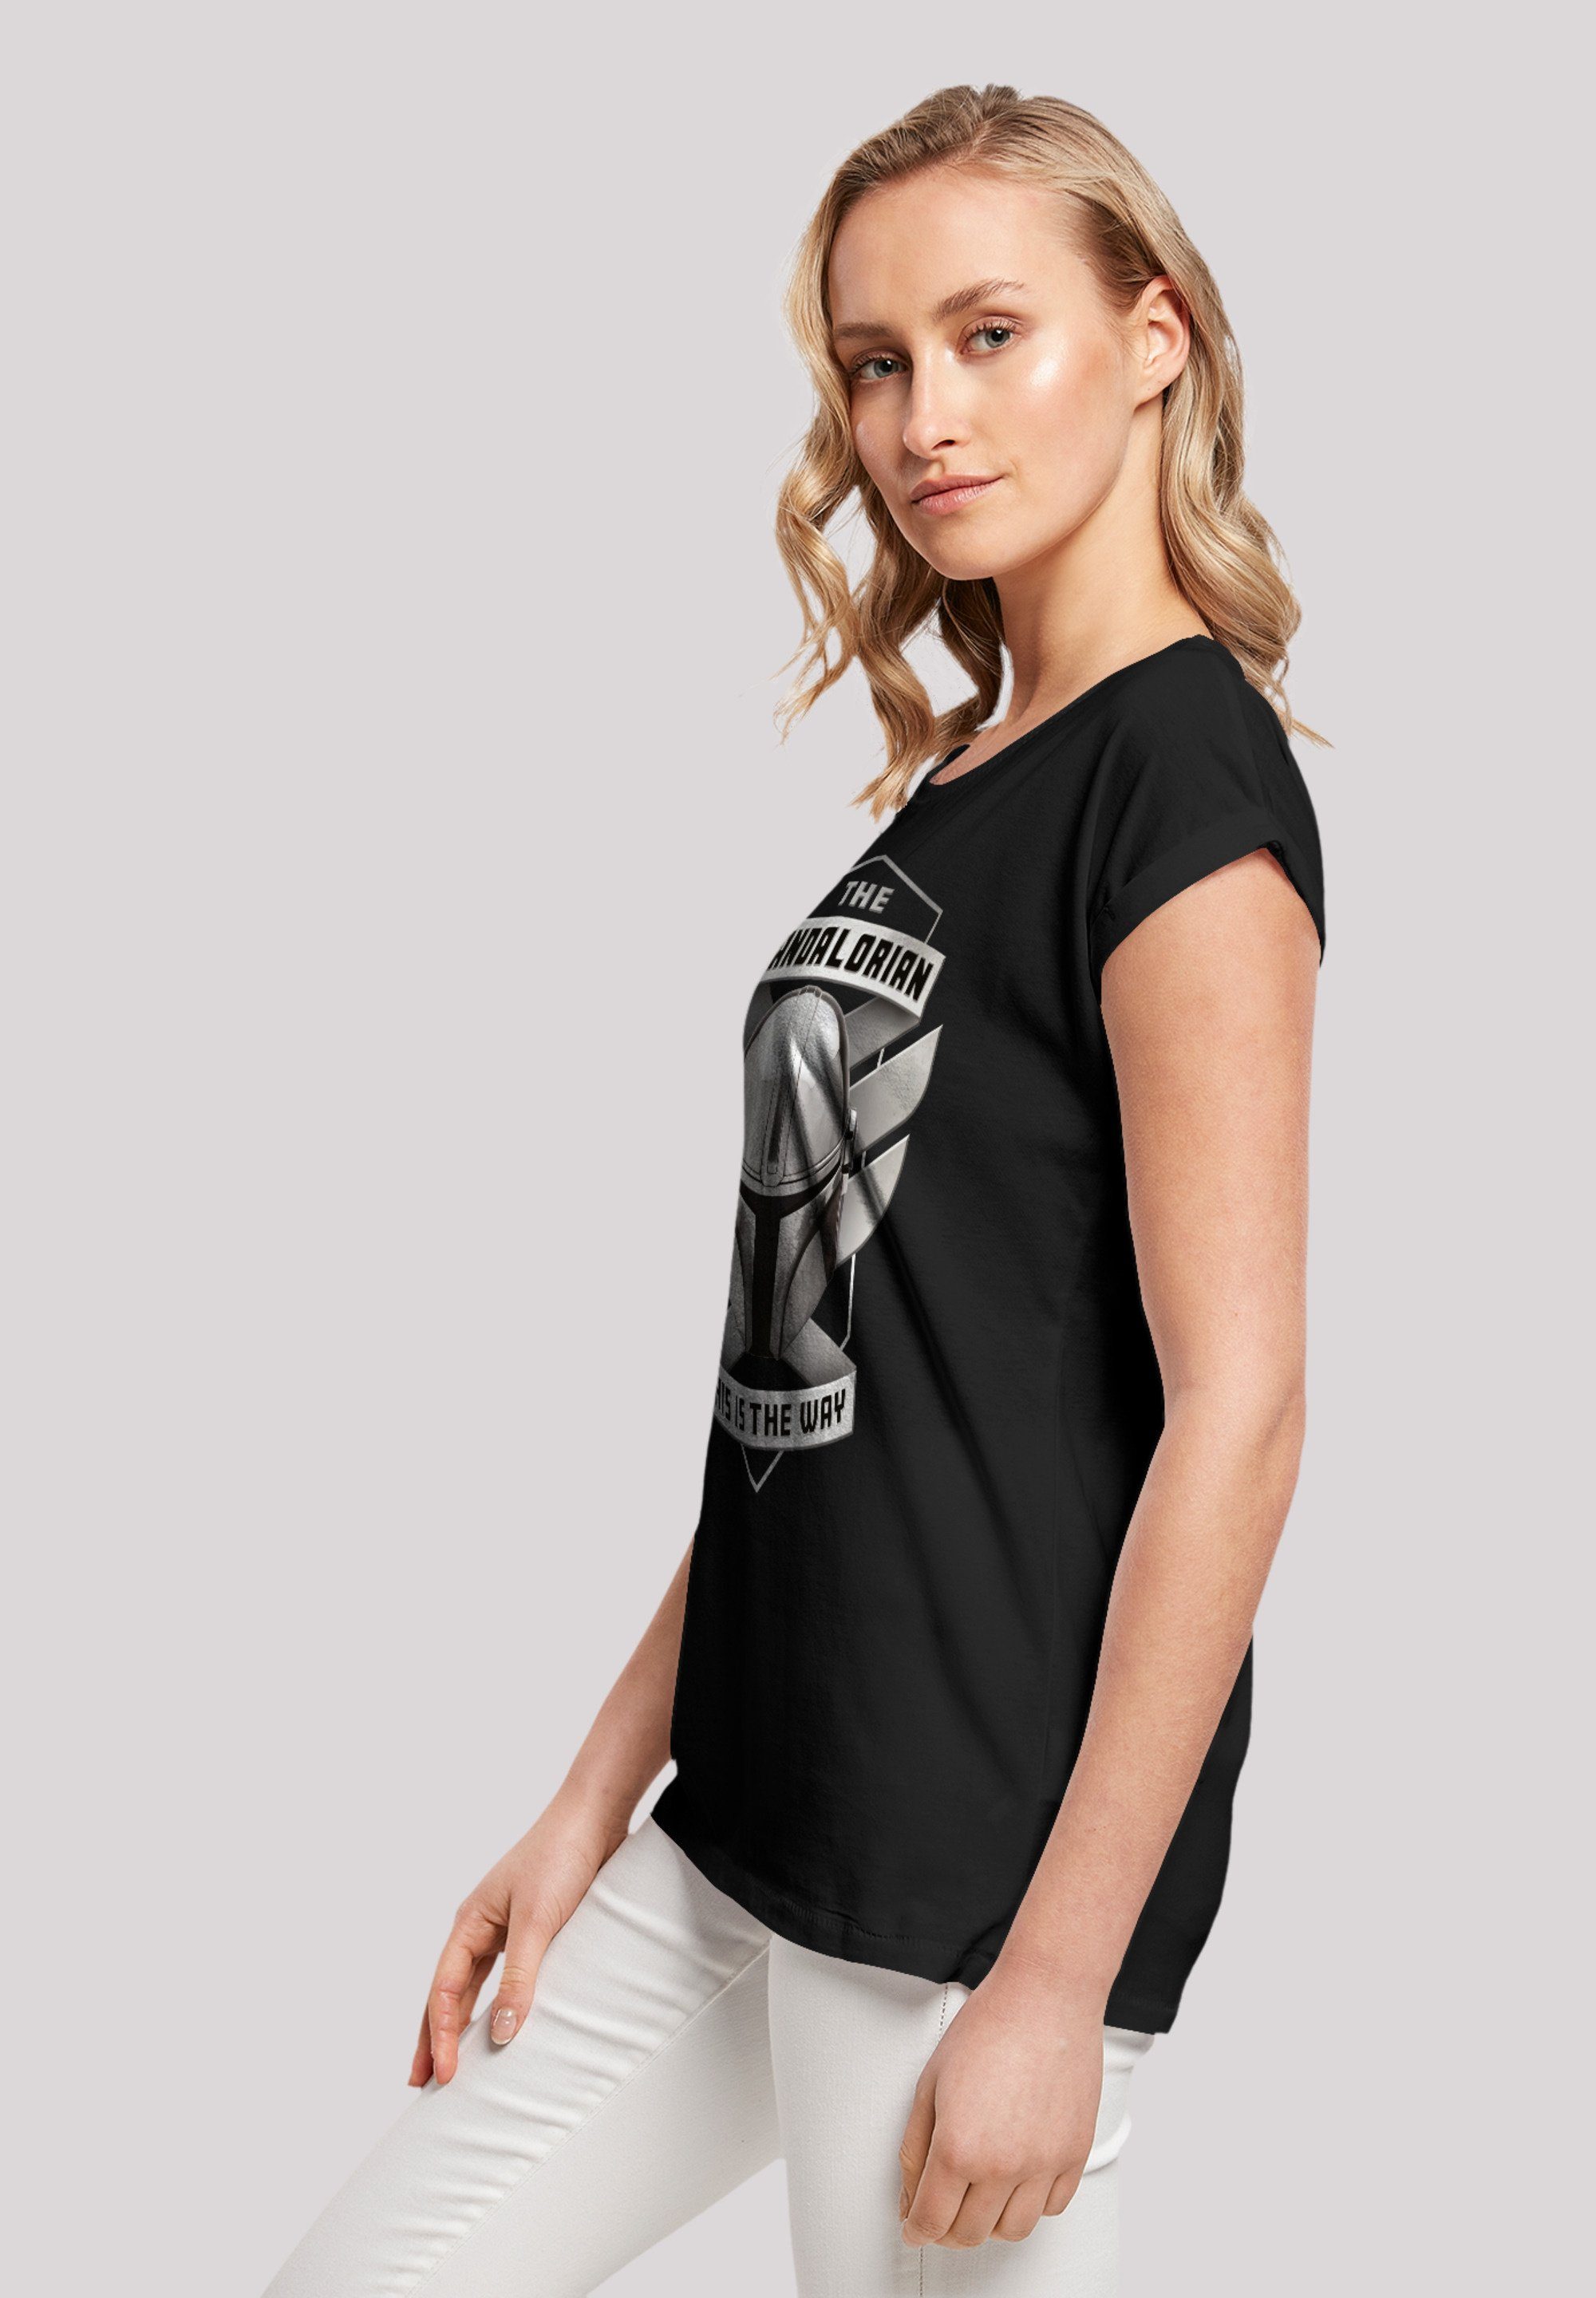 F4NT4STIC T-Shirt Wars Star Mandalorian Is Premium Qualität The The This Way